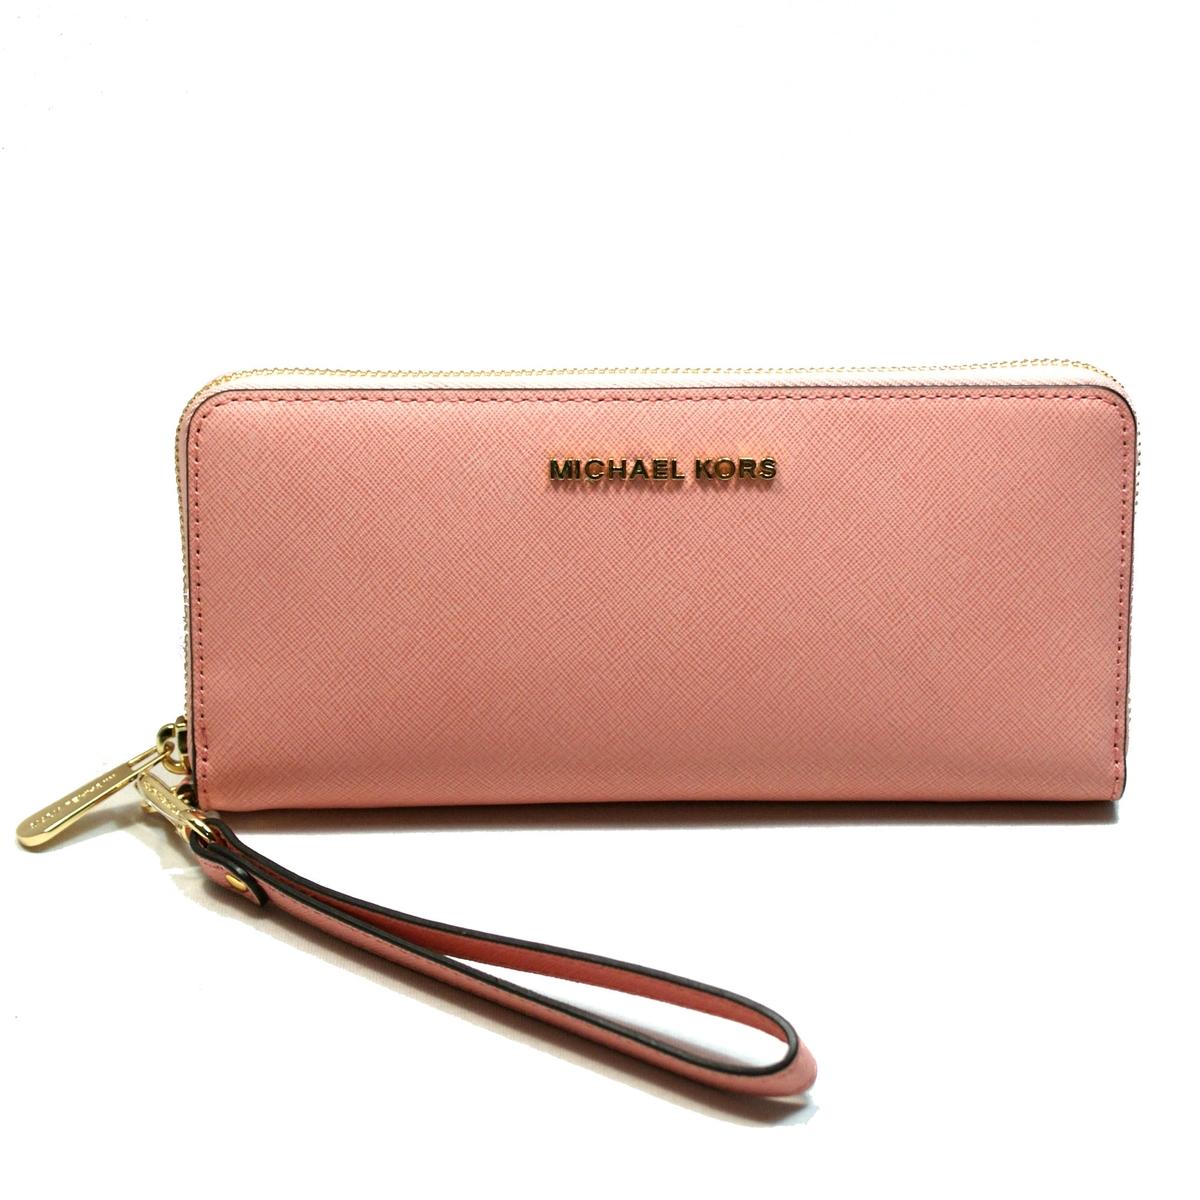 Michael Kors Jet Set Travel Continental Leather Wallet/ Clutch/ Wristlet Pale Pink #32S5STVE9L ...